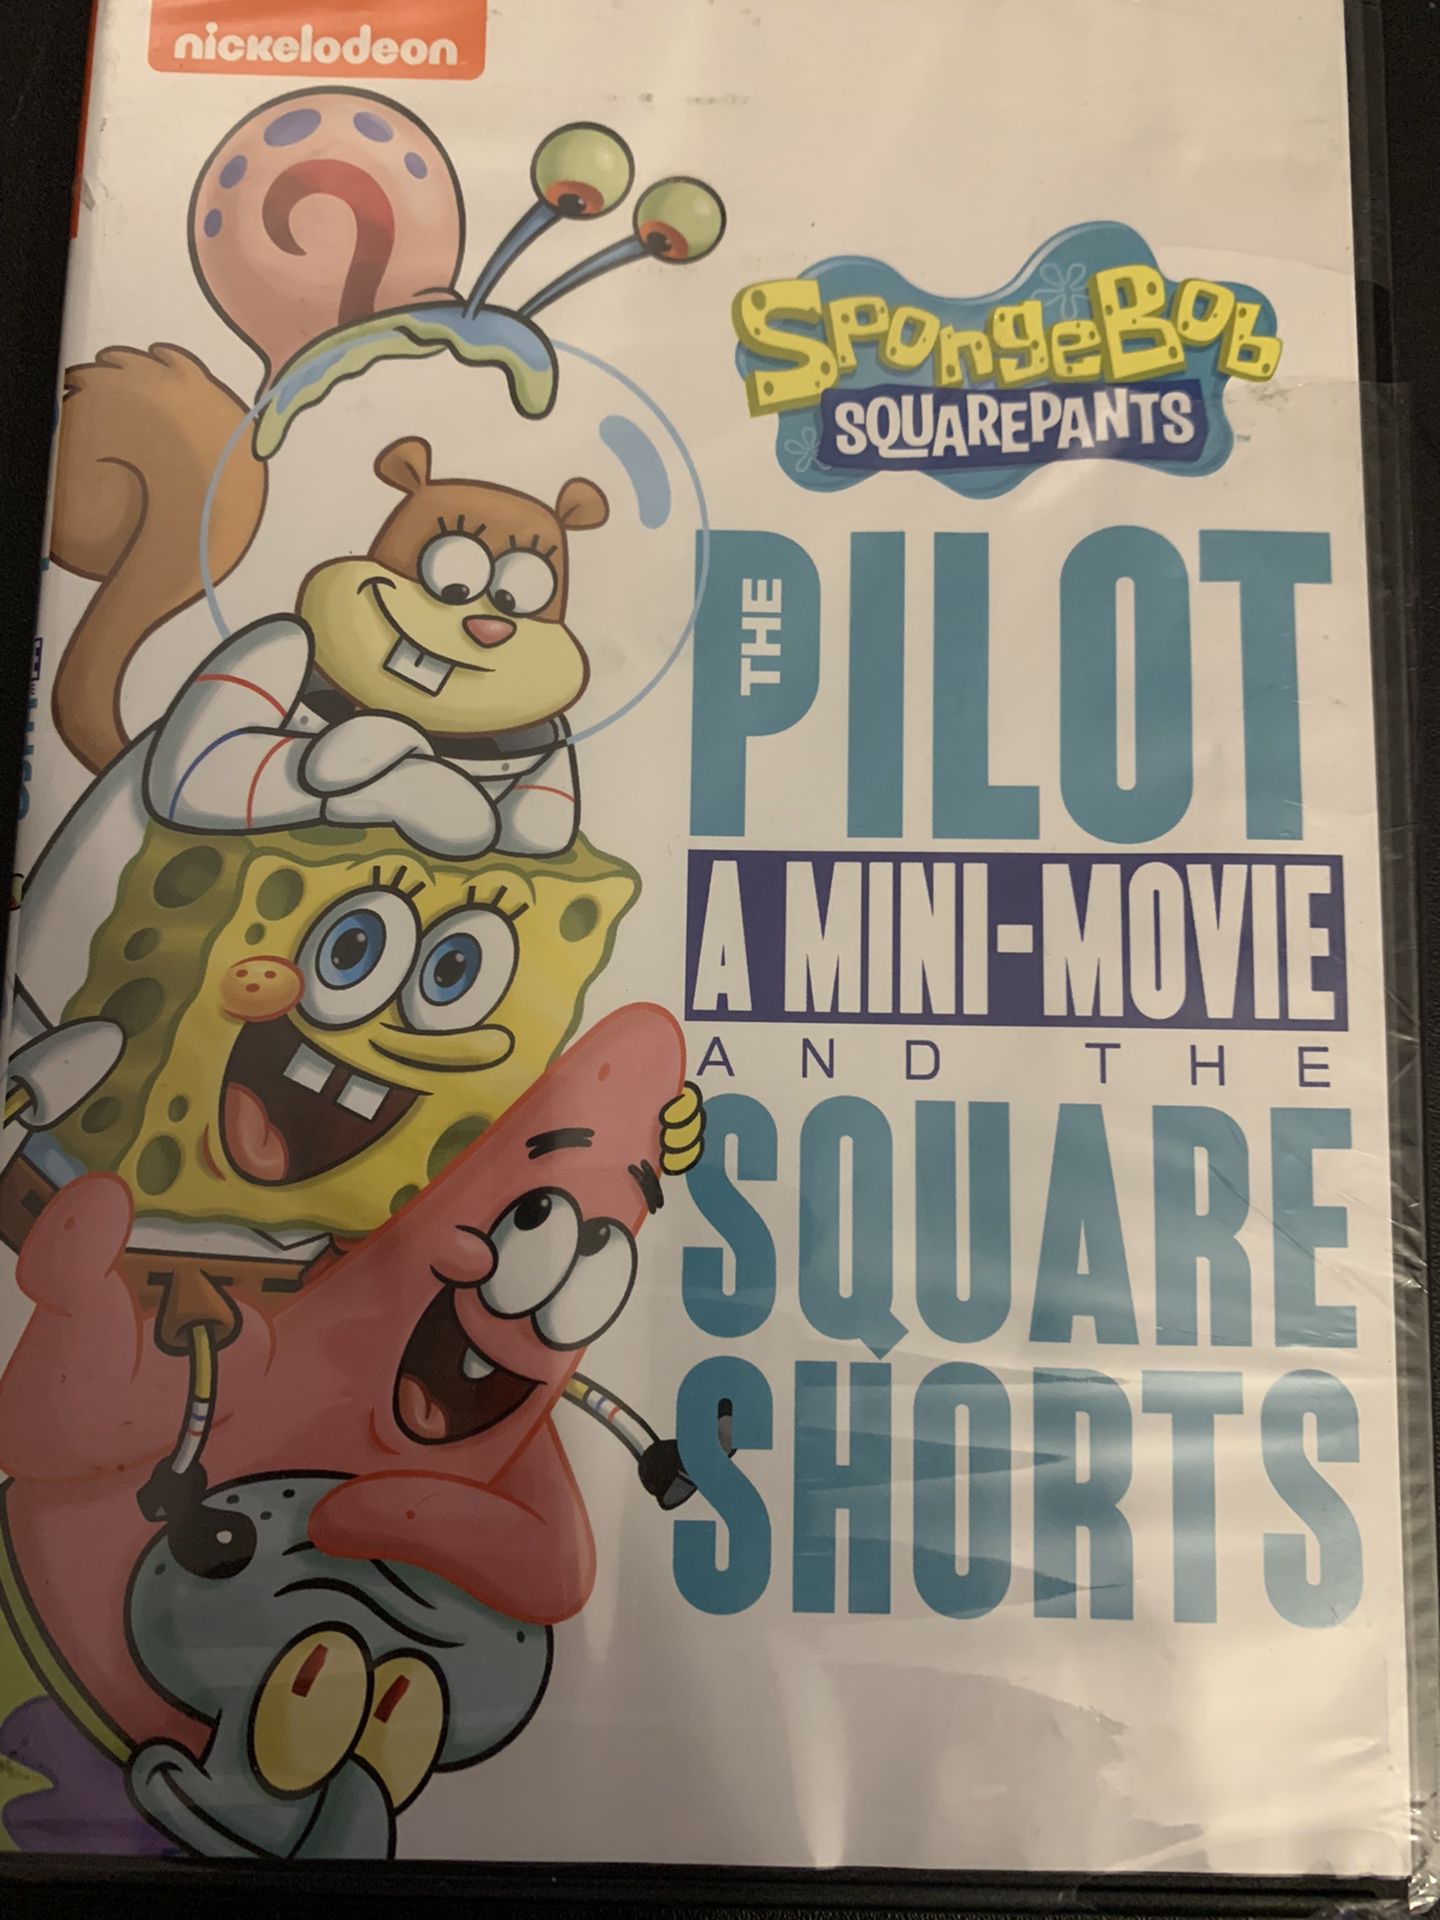 Nickelodeon’s SPONGEBOB SQUAREPANTS The PILOT A Mini-Movie And The SQUARE SHORTS